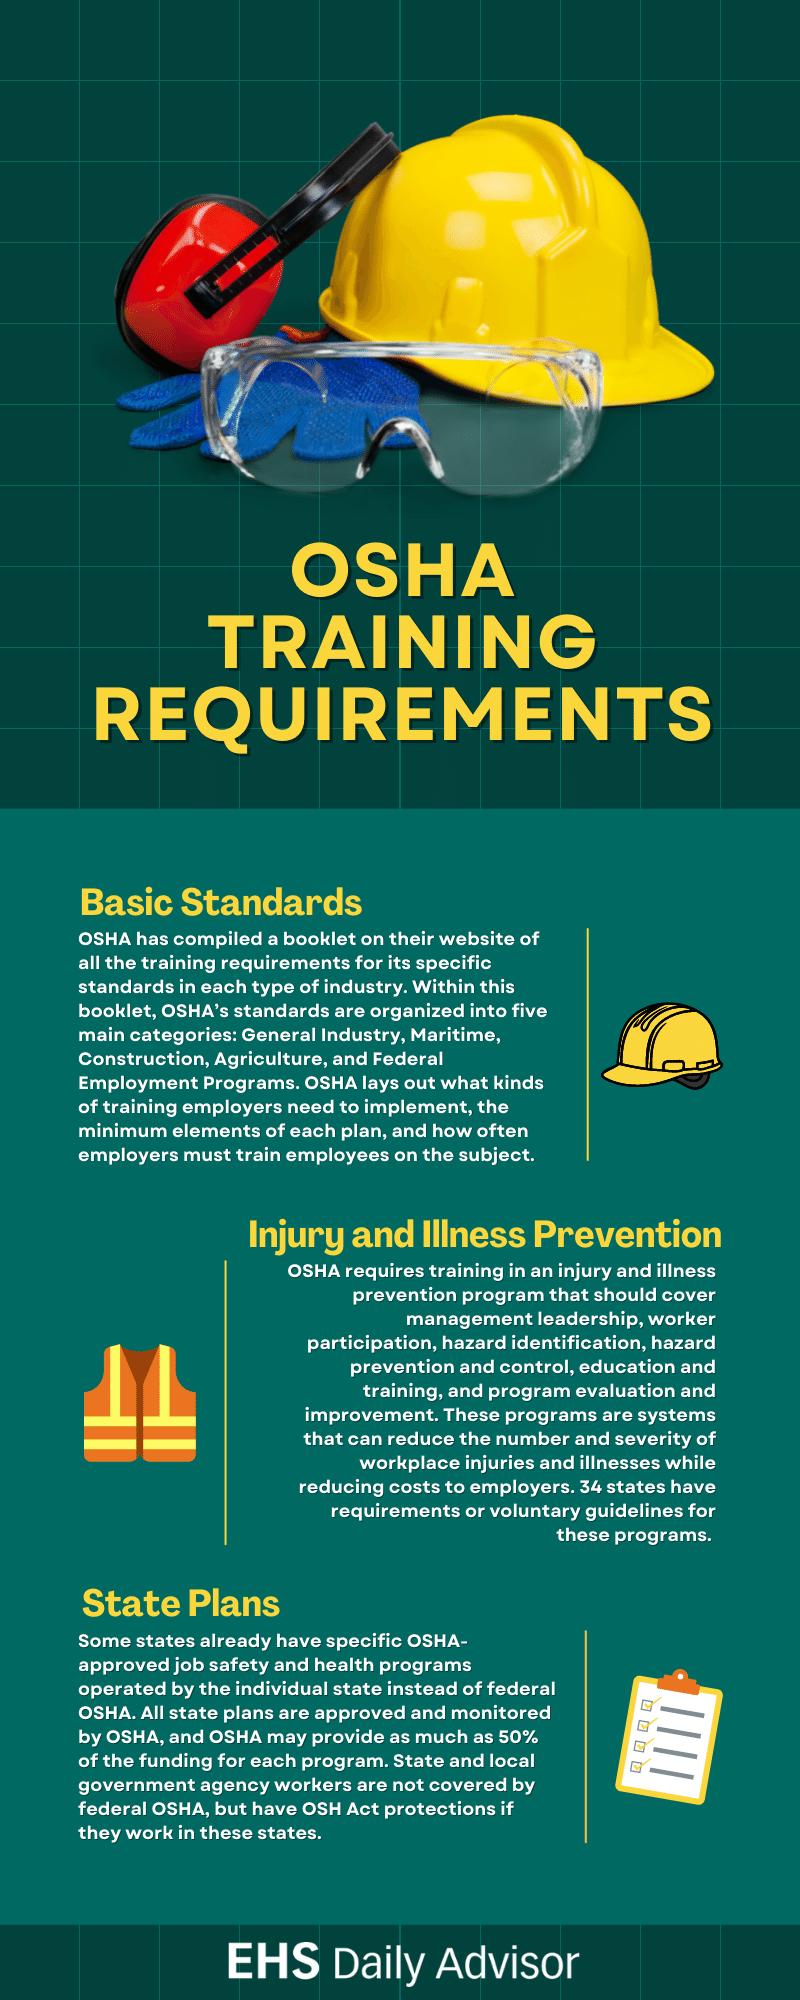 Who Should Consider OSHA Training? Understanding the Importance